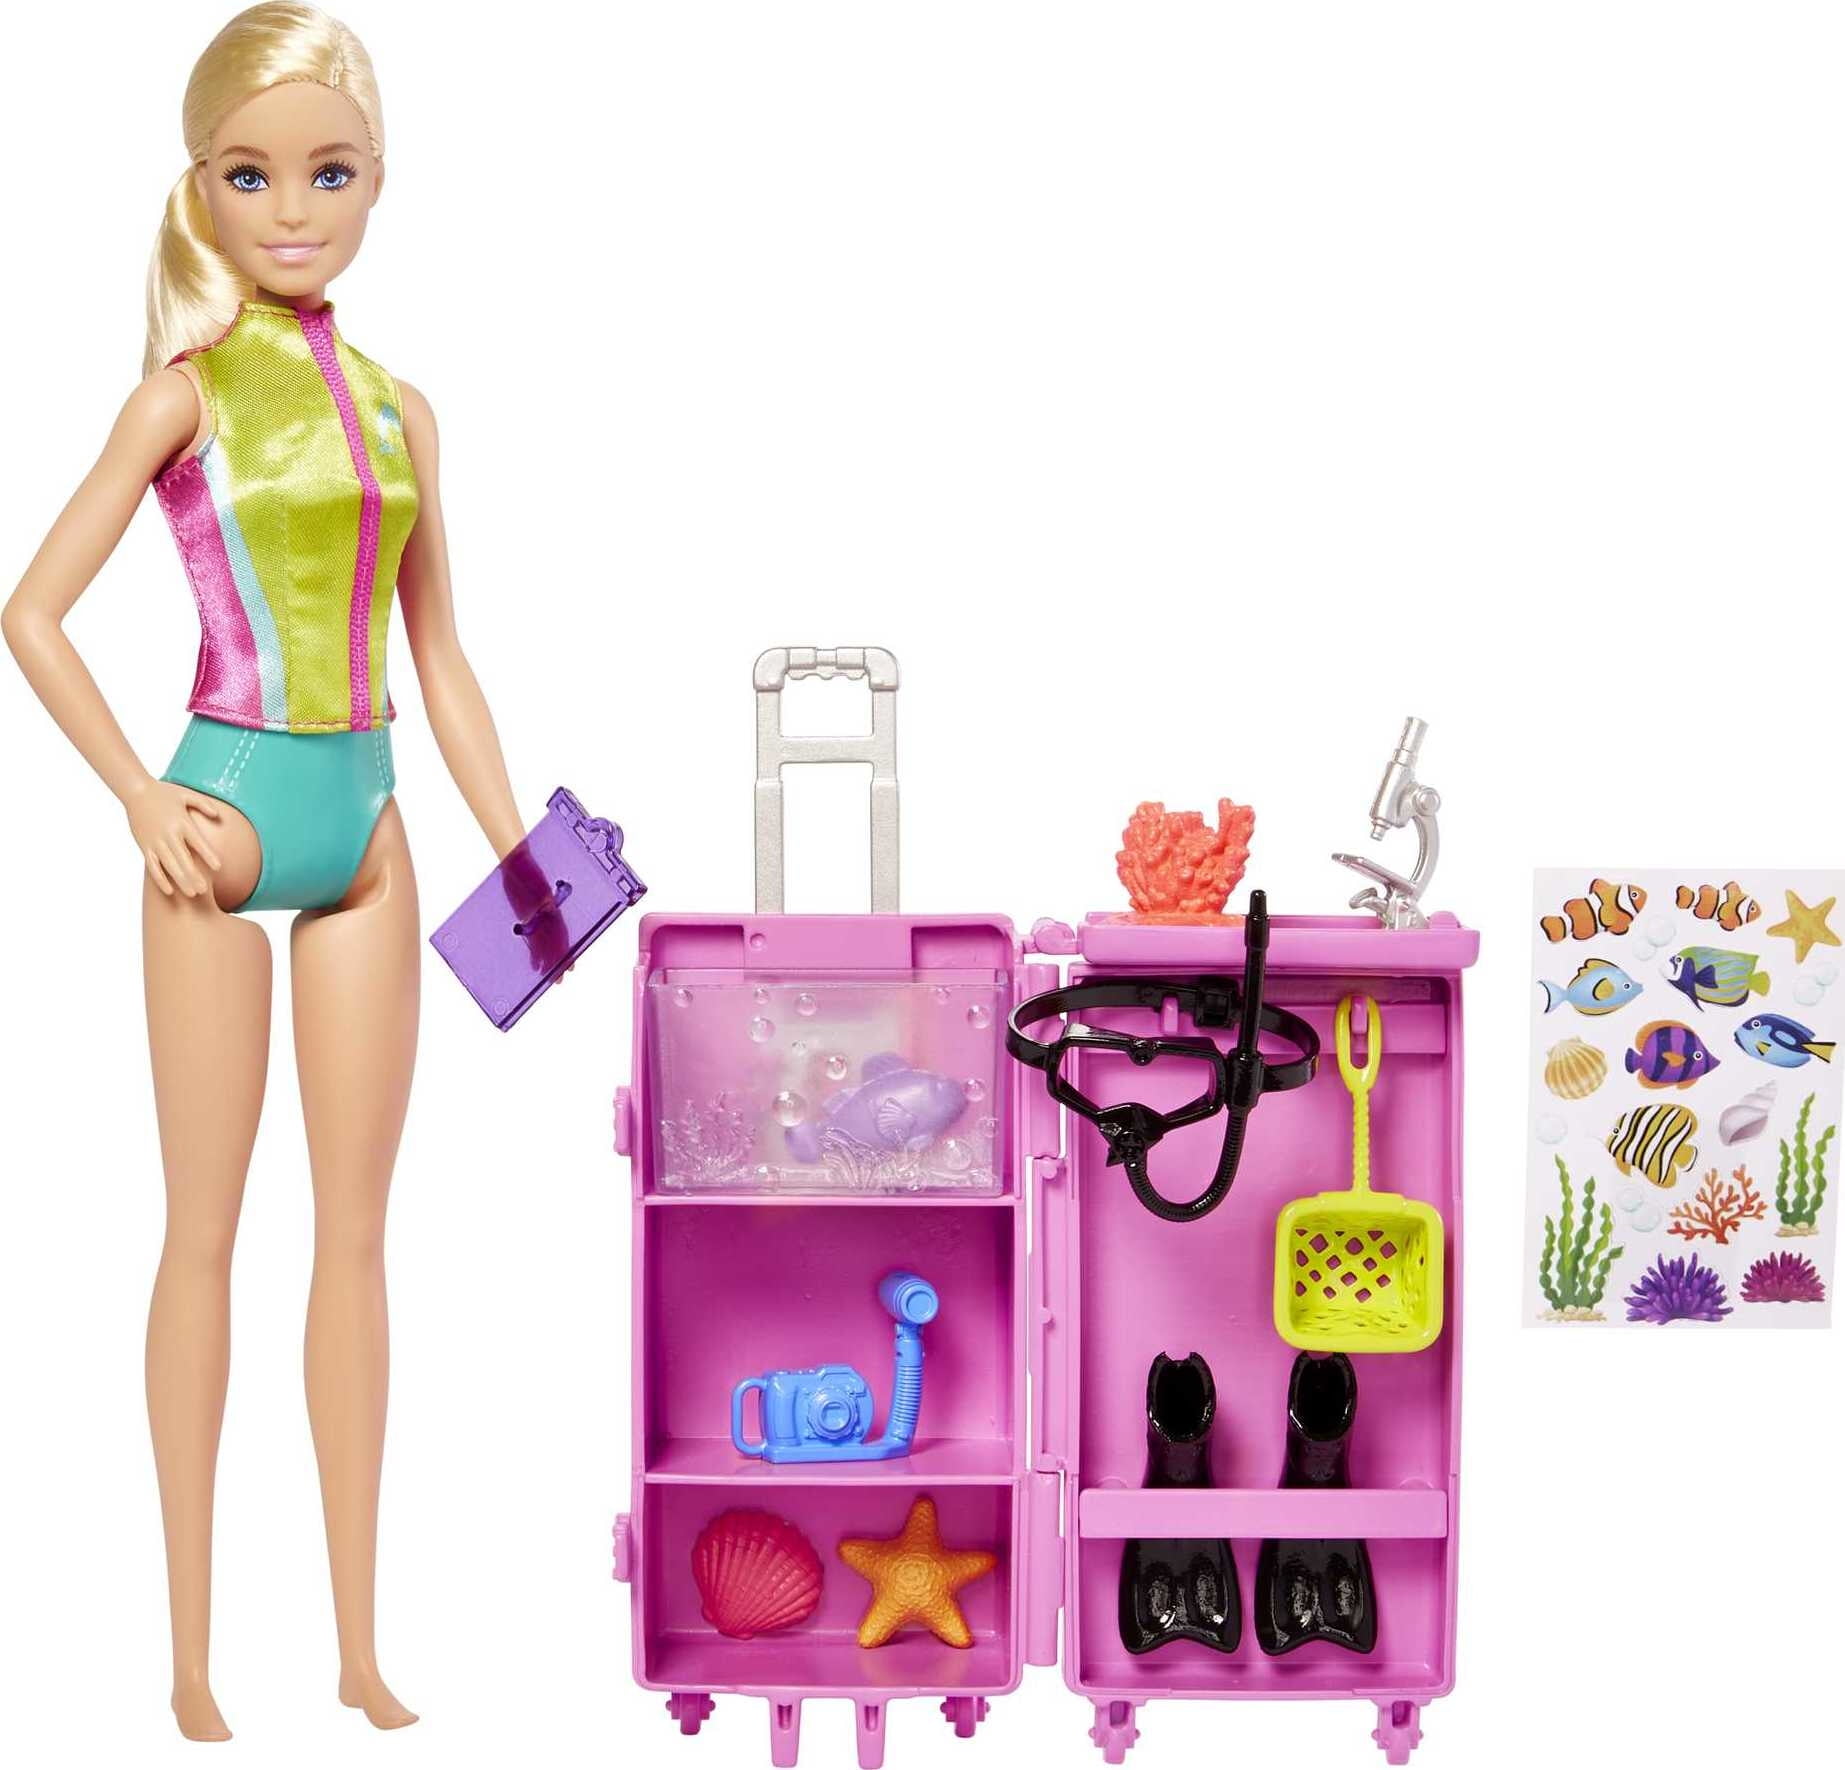 Barbie Marine Biologist Doll & 10+ Accessories, Mobile Lab Playset with Blonde Doll & Storage